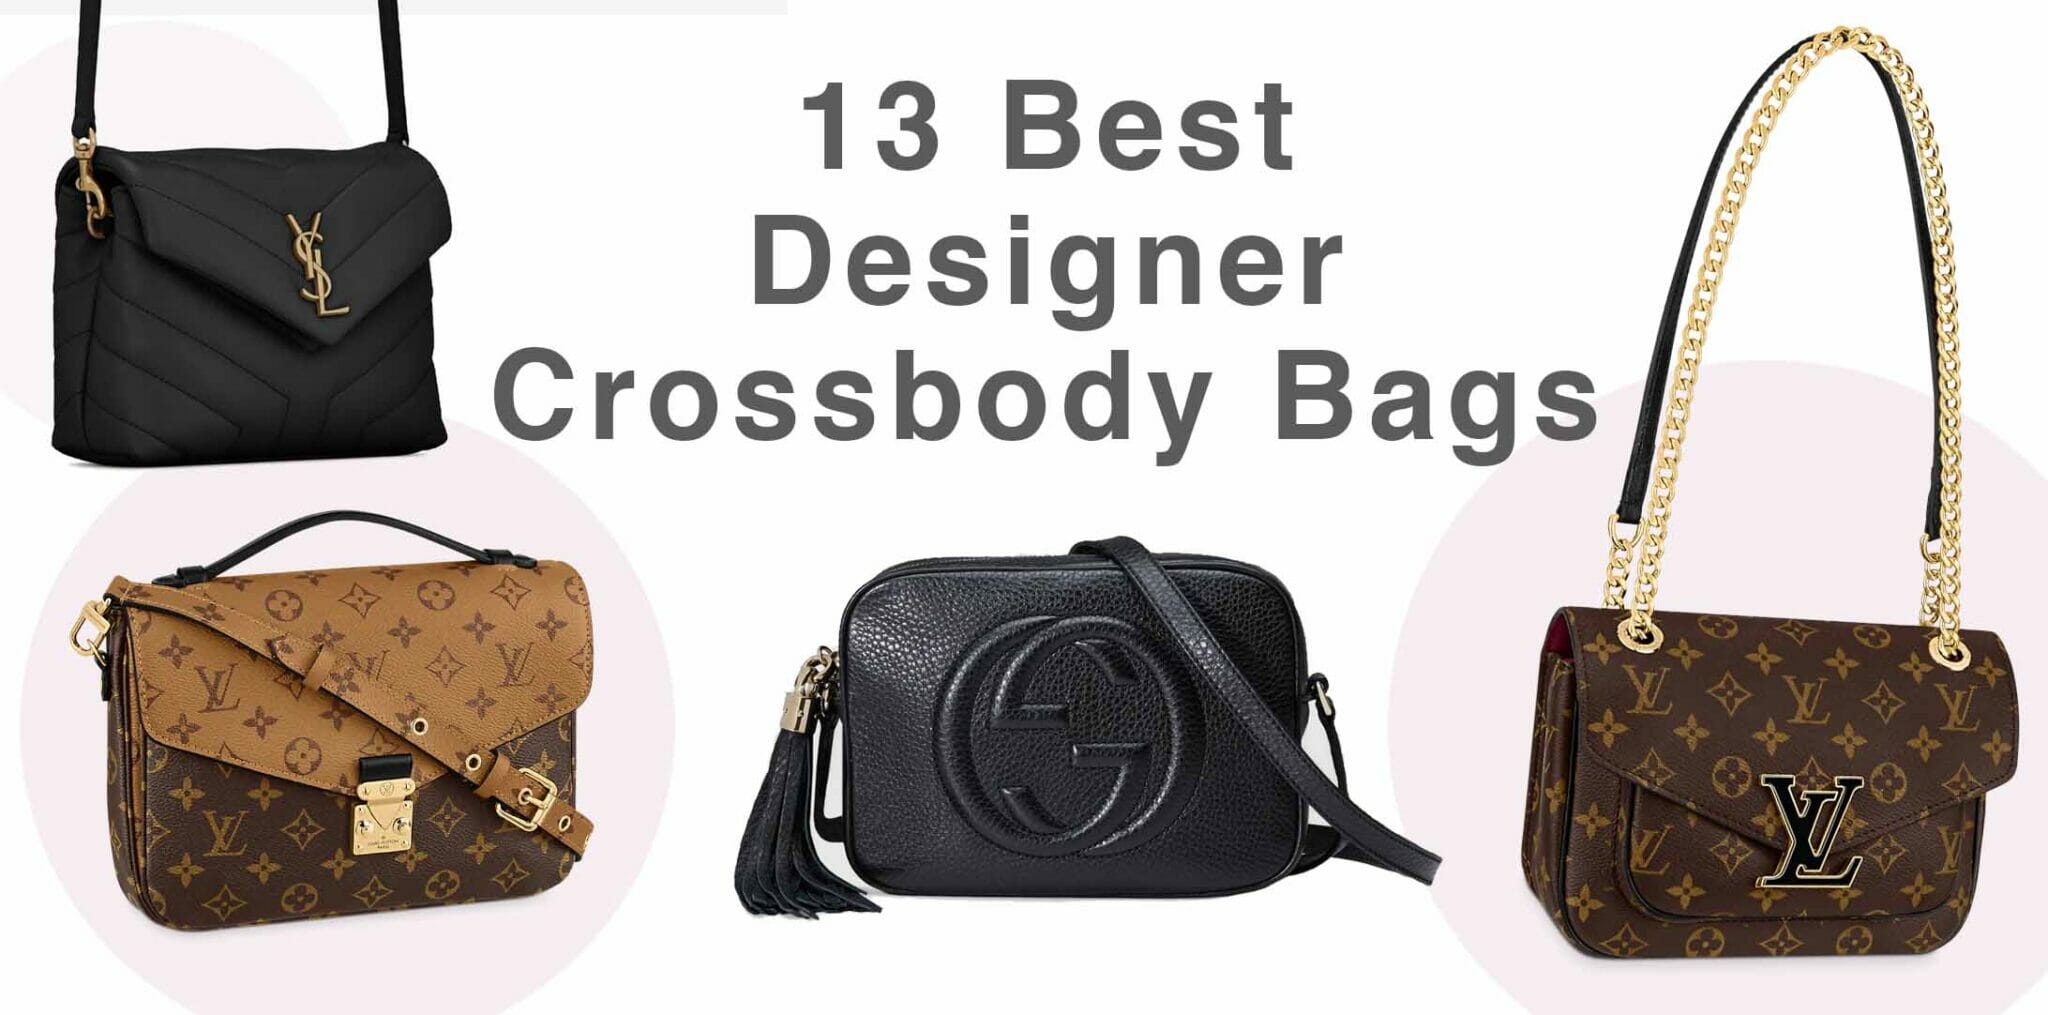 13 Best Designer Crossbody Bags with Video - Handbagholic